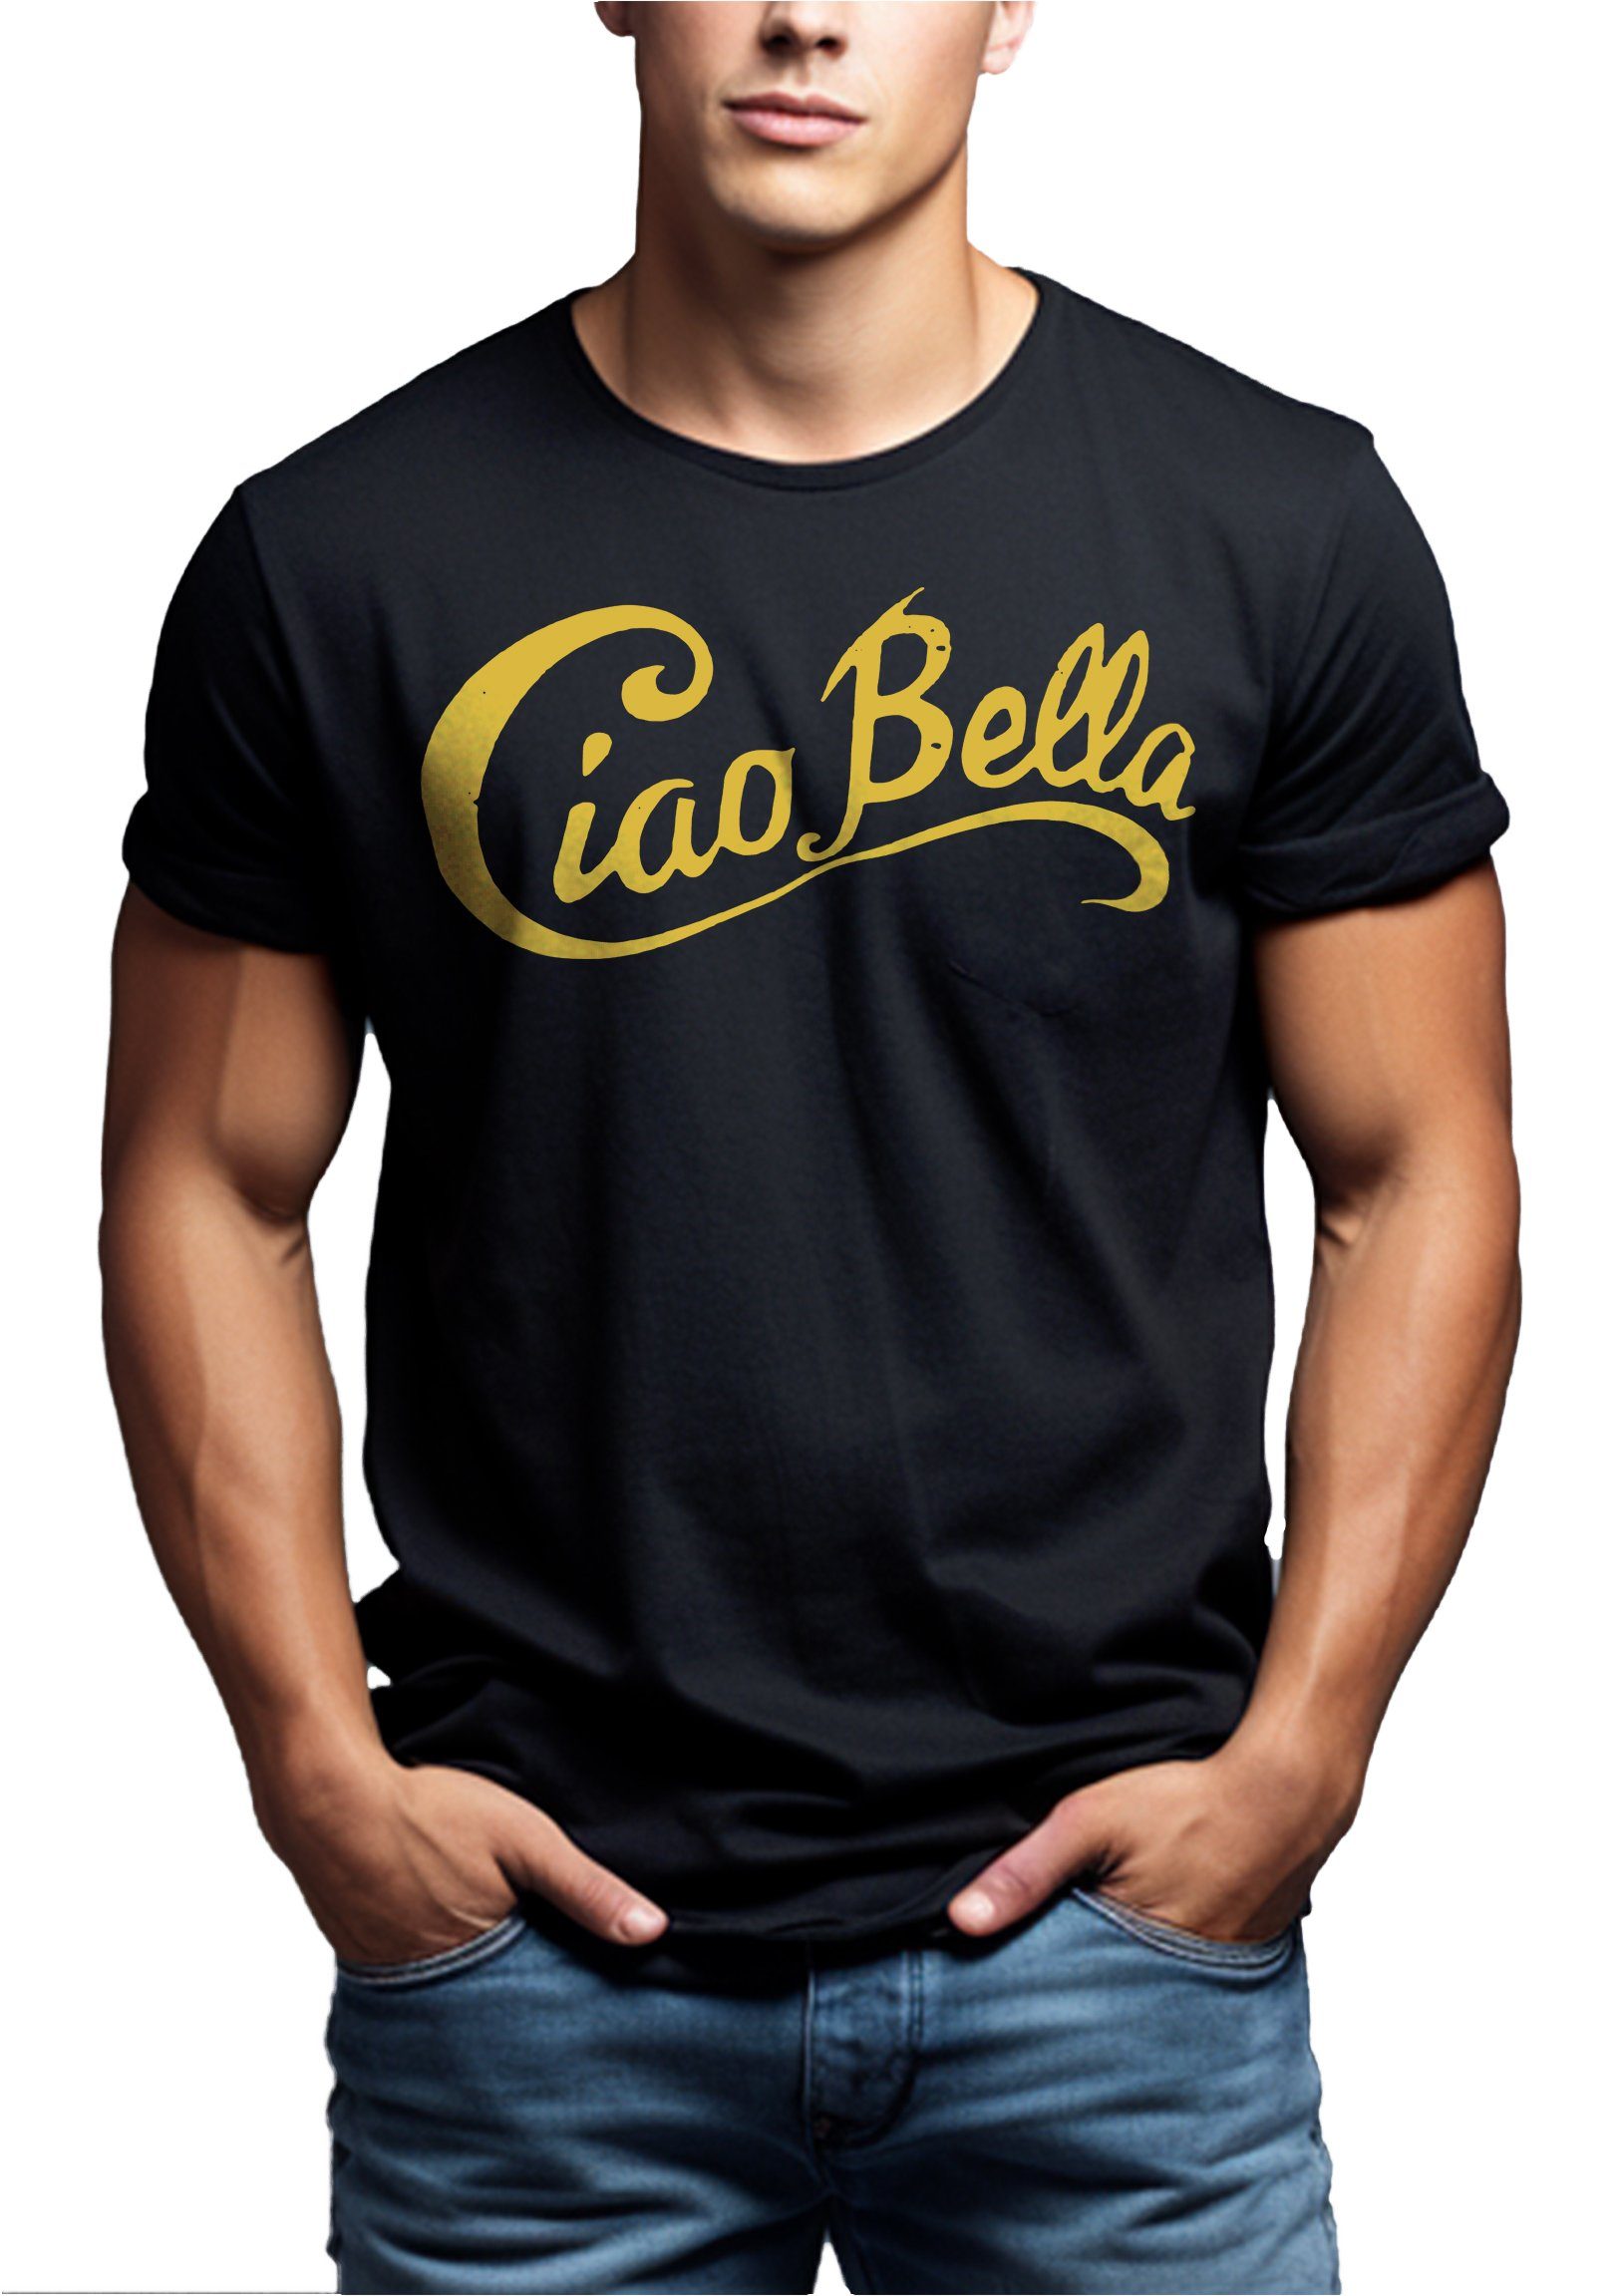 MAKAYA Print-Shirt Herren Italienischer Spruch Bella Mode Coole Motiv Logo, Schwarz Style Italien Ciao